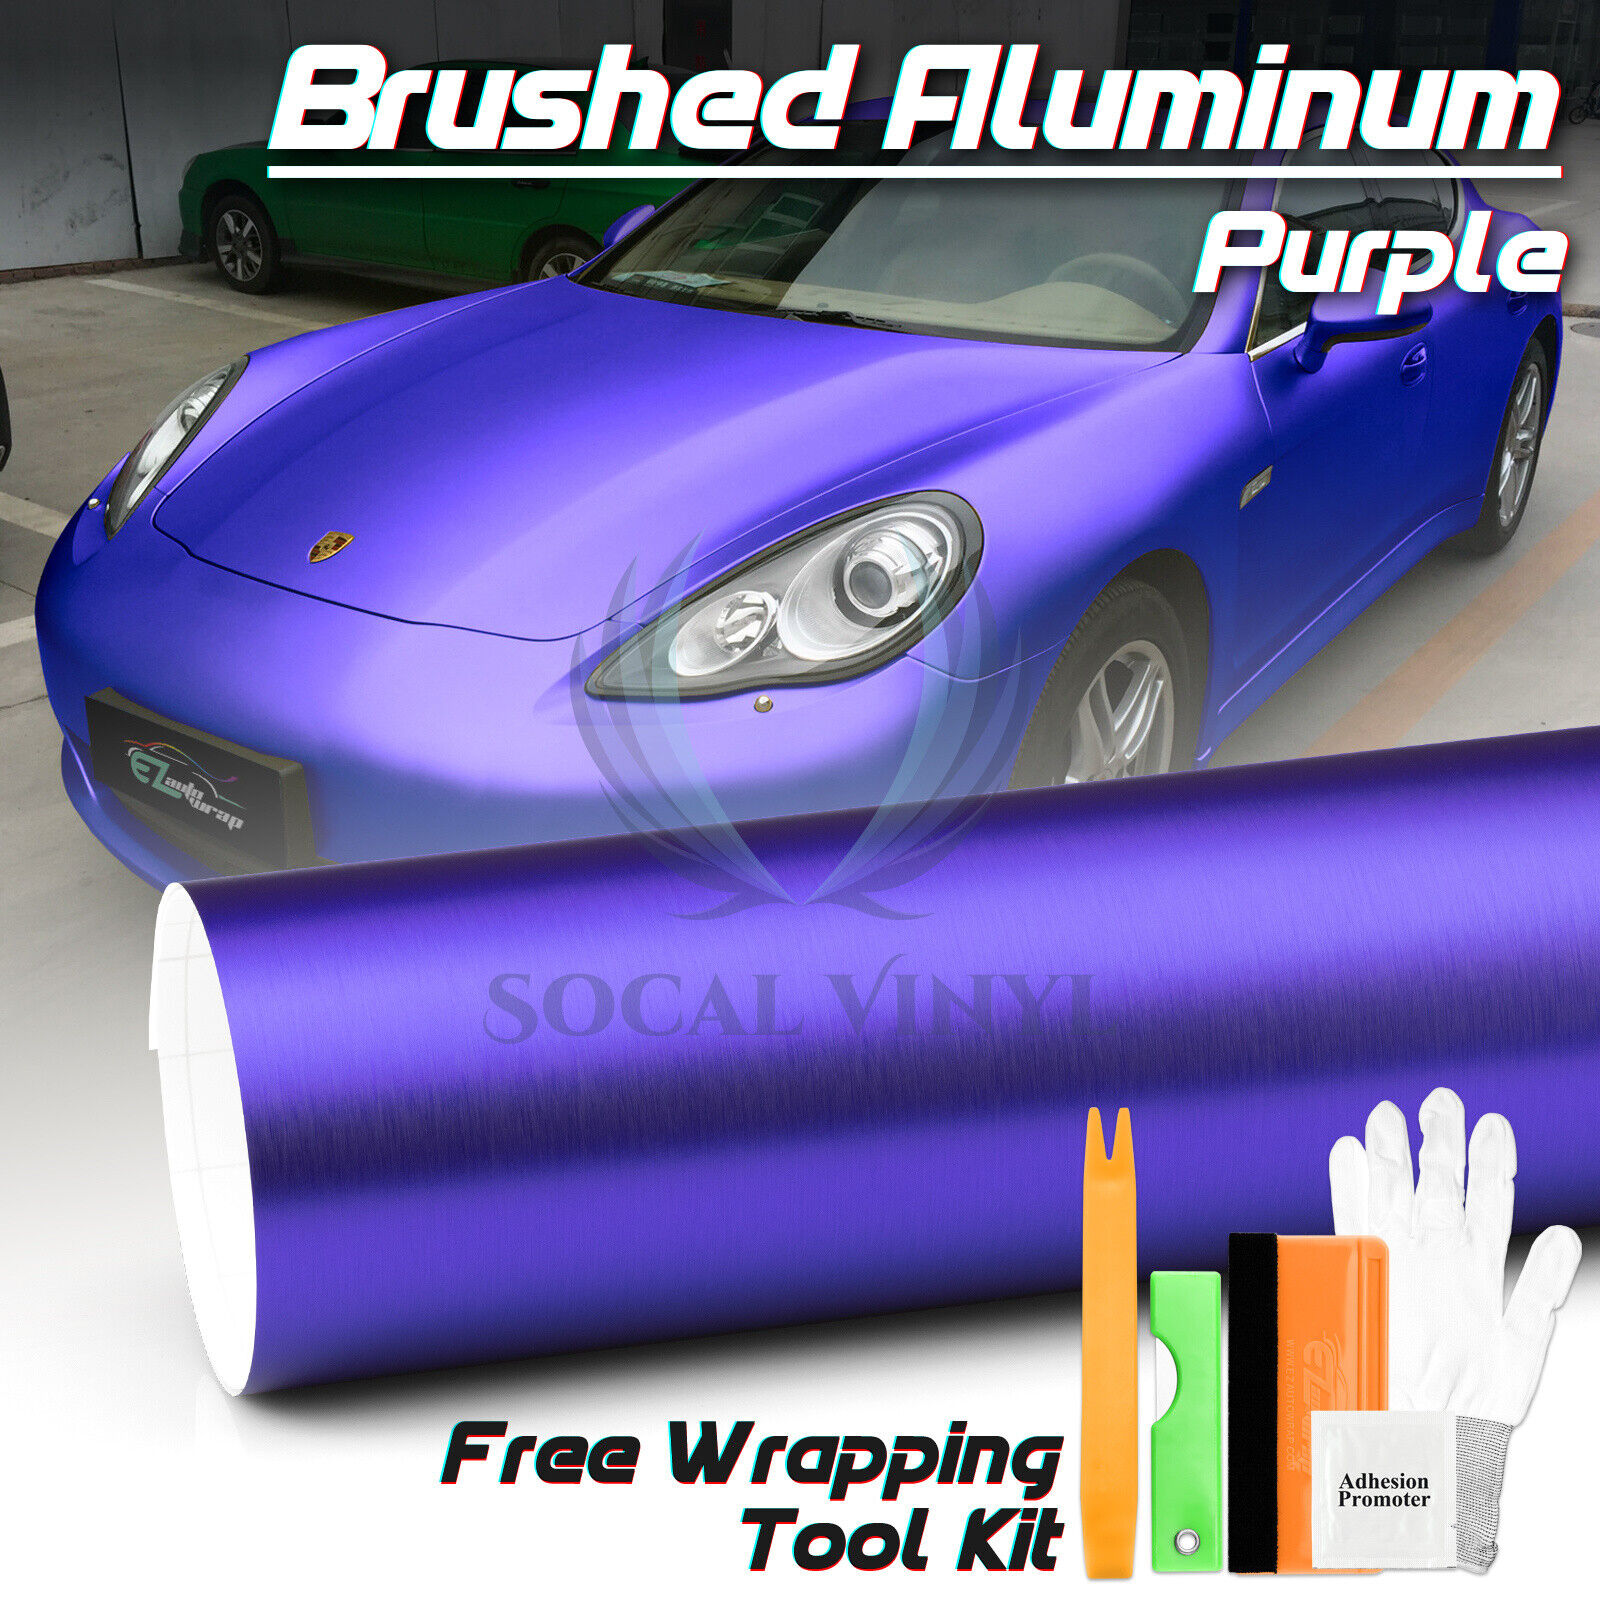 Premium Brushed Aluminum Royal Purple Steel Vinyl Wrap Sticker Film Air Release